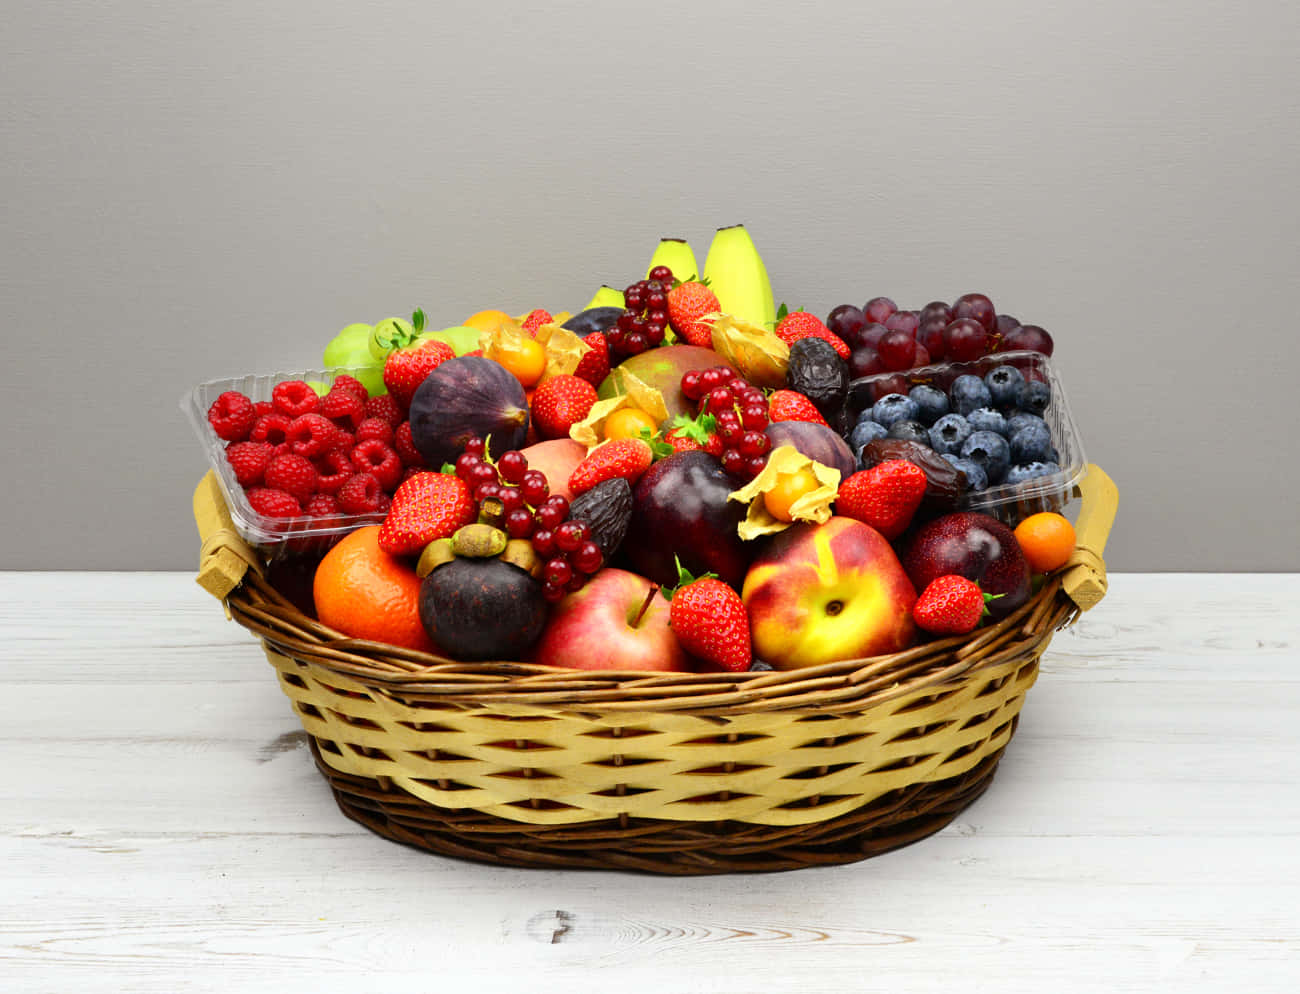 Download A Basket Of Fruit | Wallpapers.com